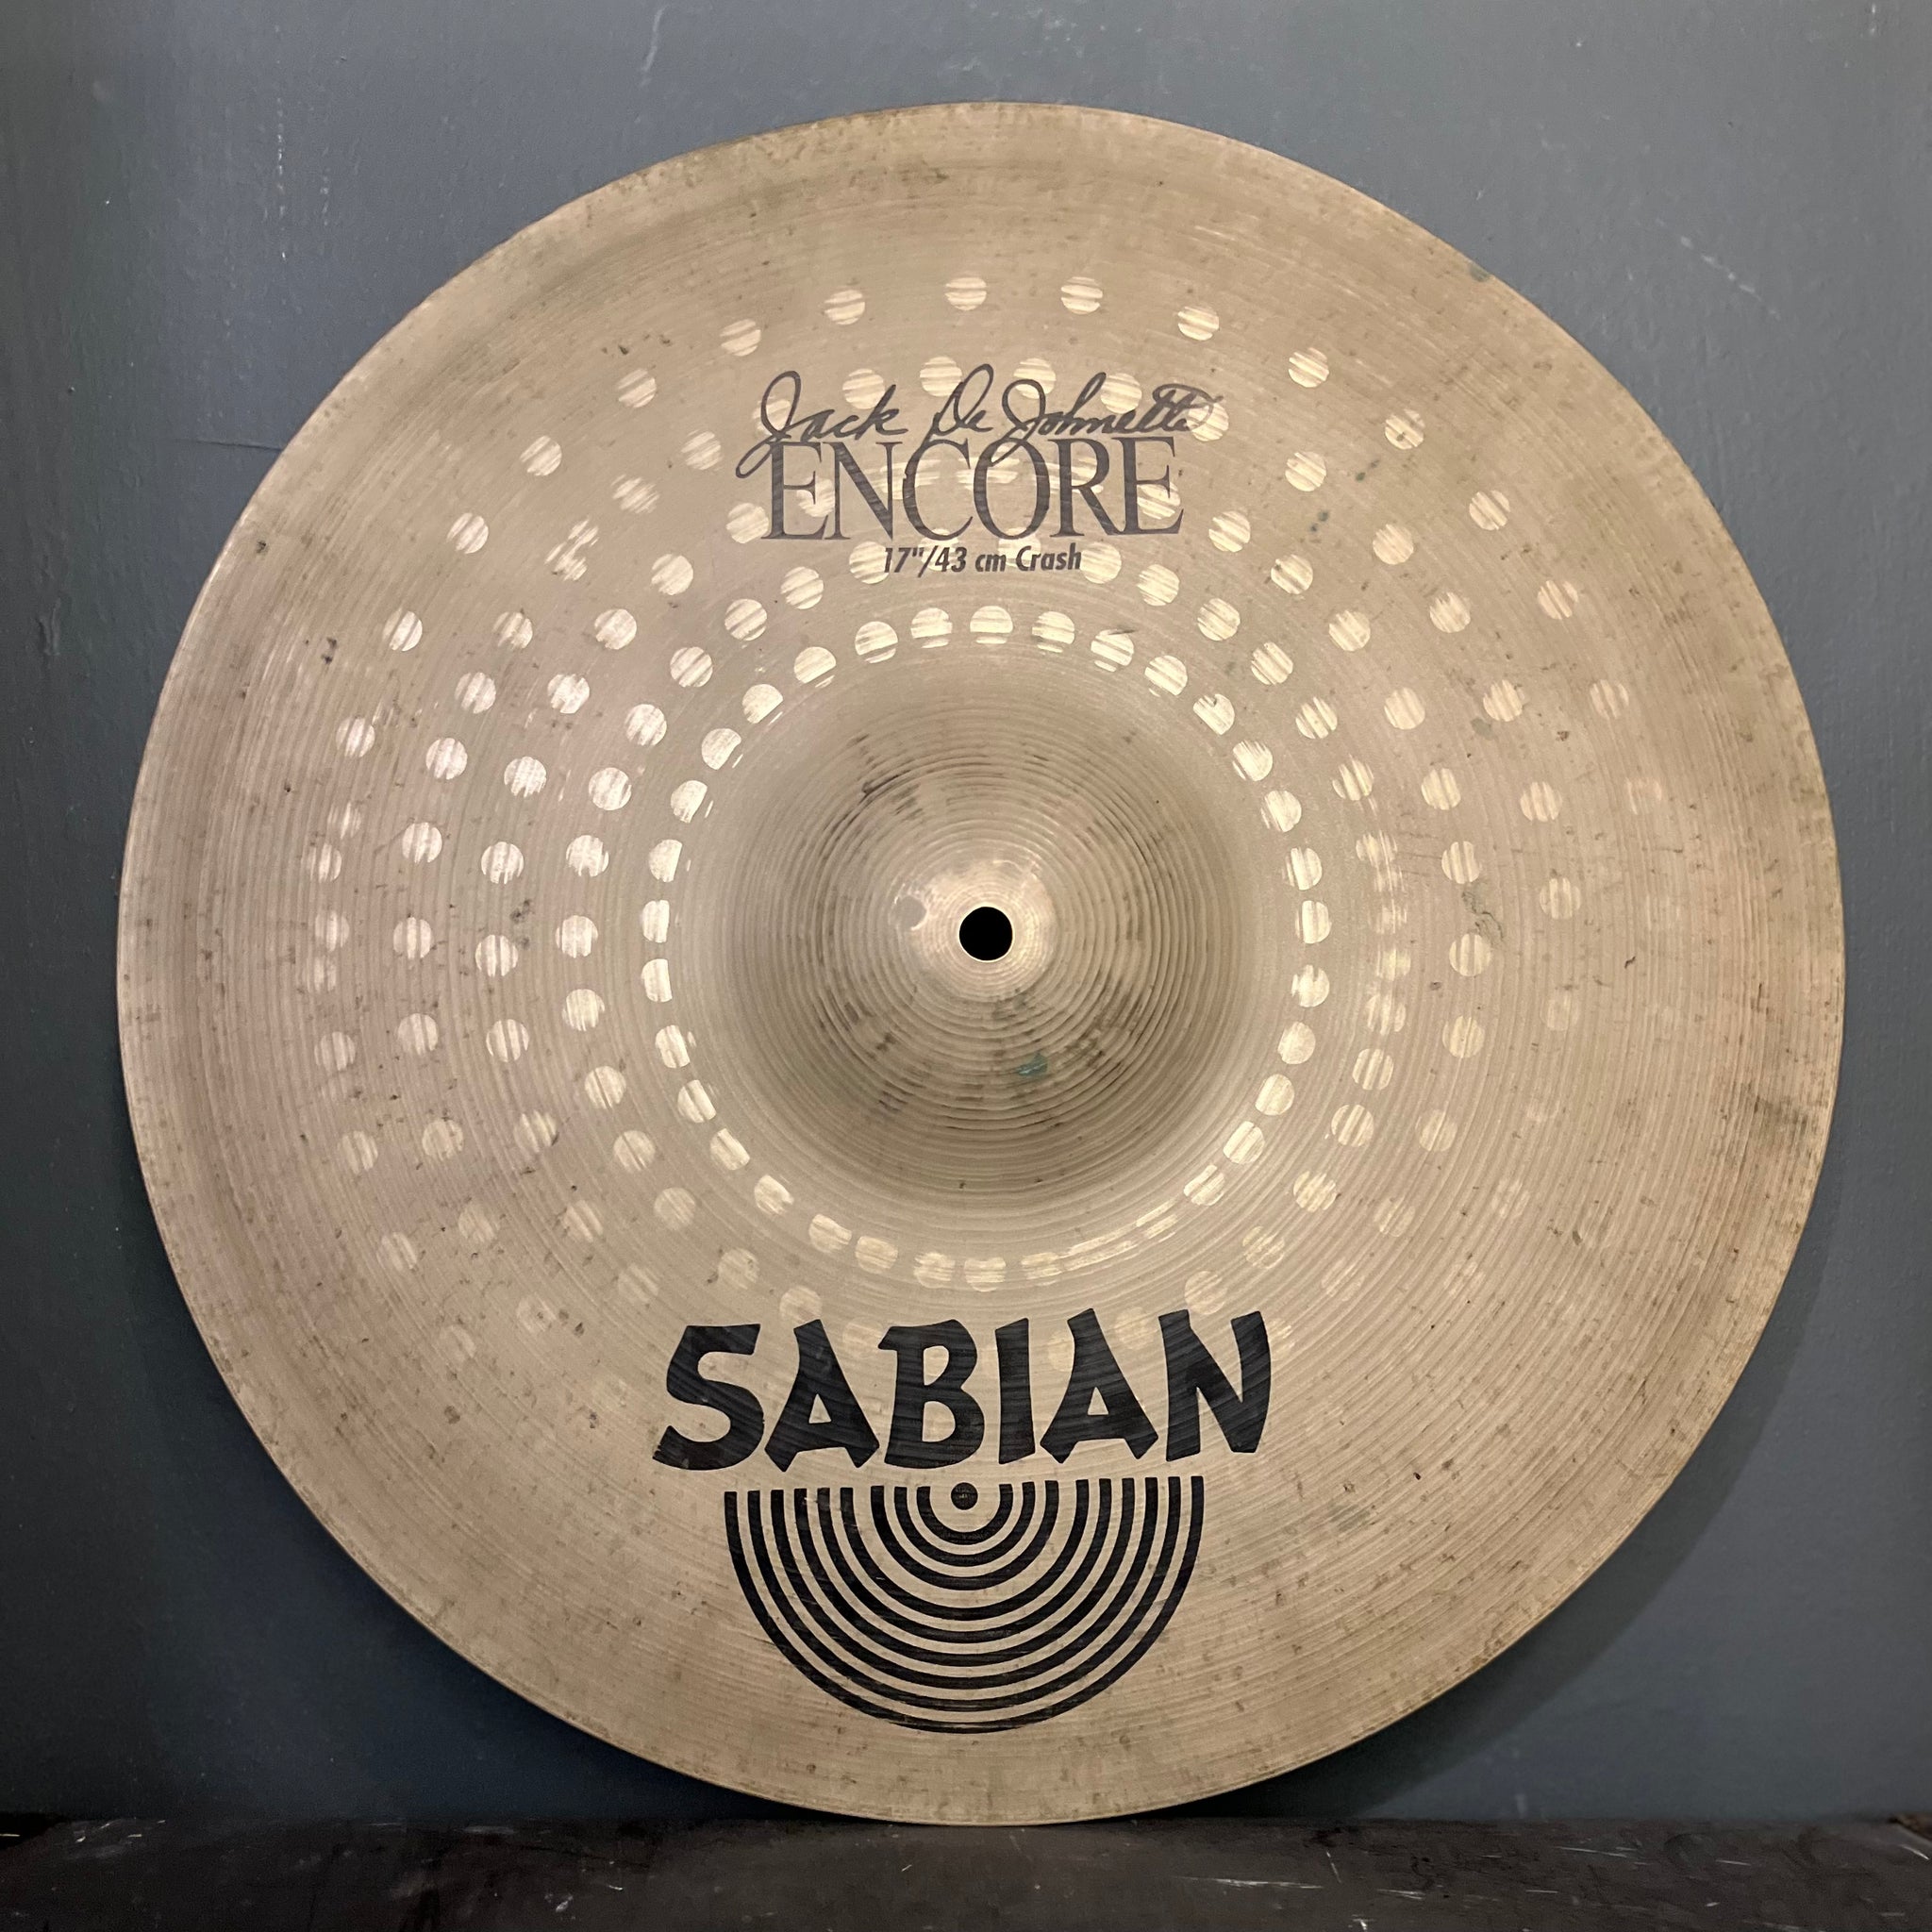 USED Sabian 17" Jack DeJohnette Encore Crash Cymbal - 1186g